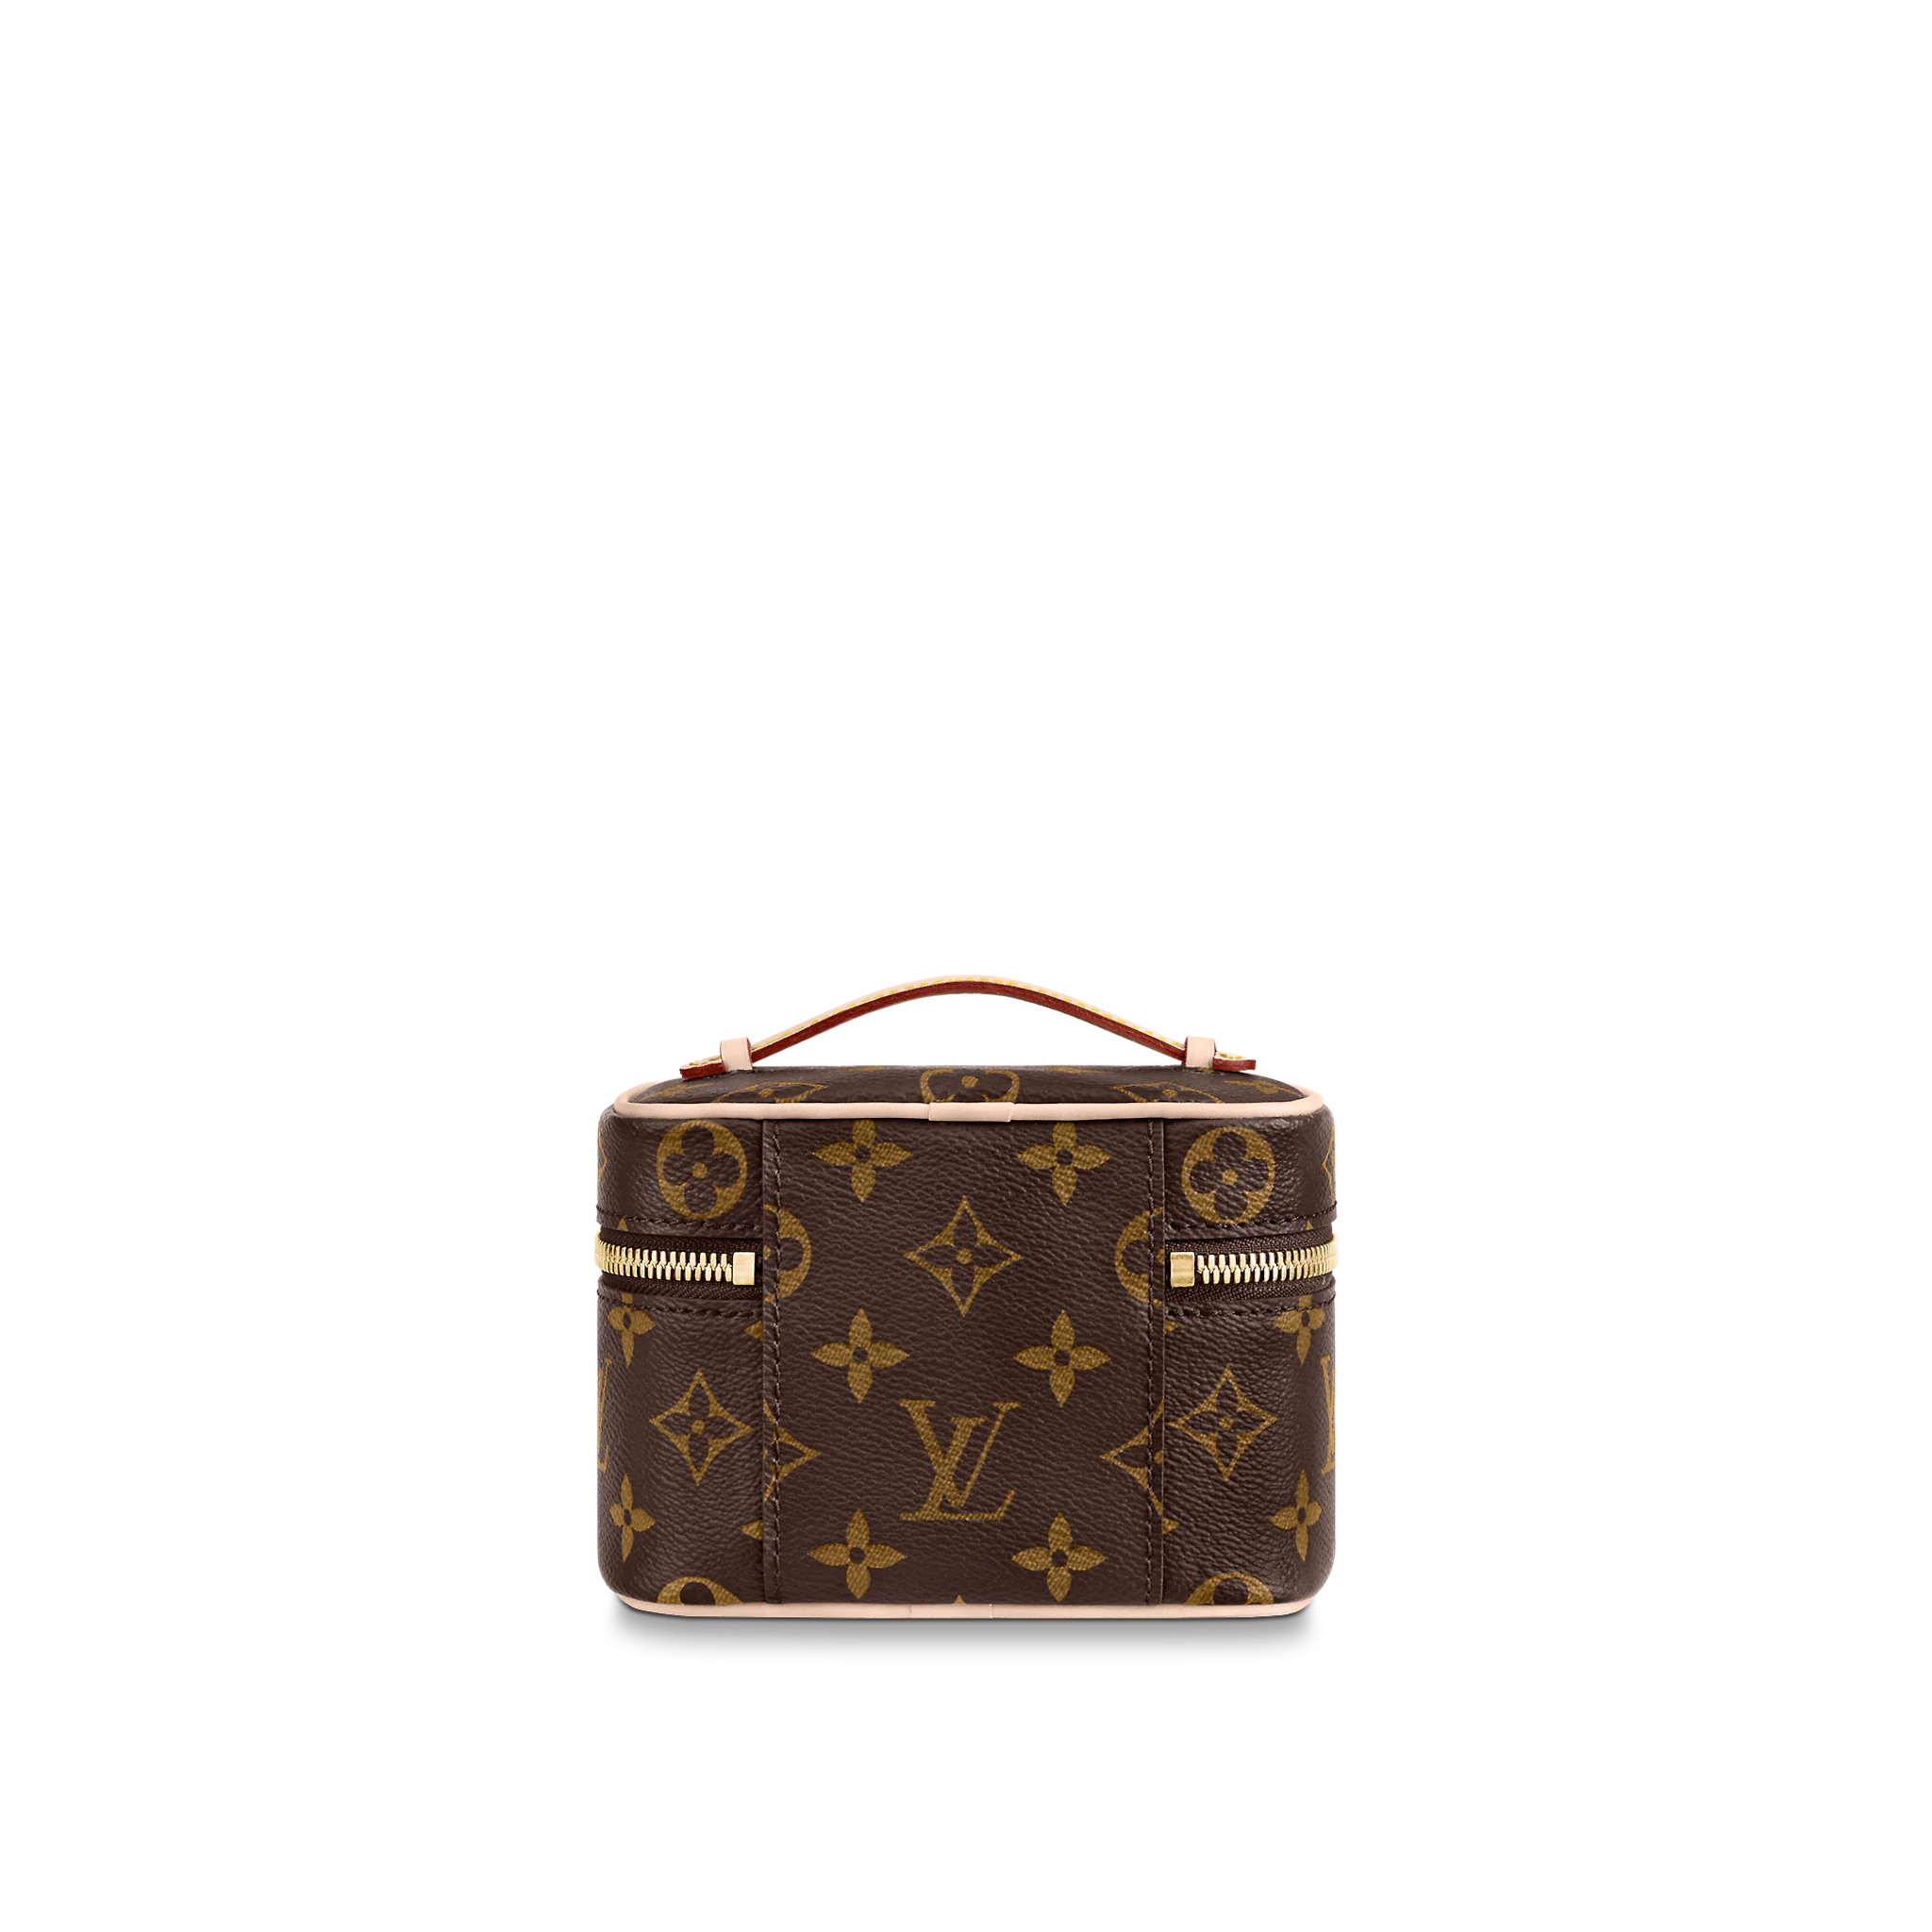 240 Louis Vuitton Bag Stock Photos Pictures  RoyaltyFree Images   iStock  Money Luxury Designer bag